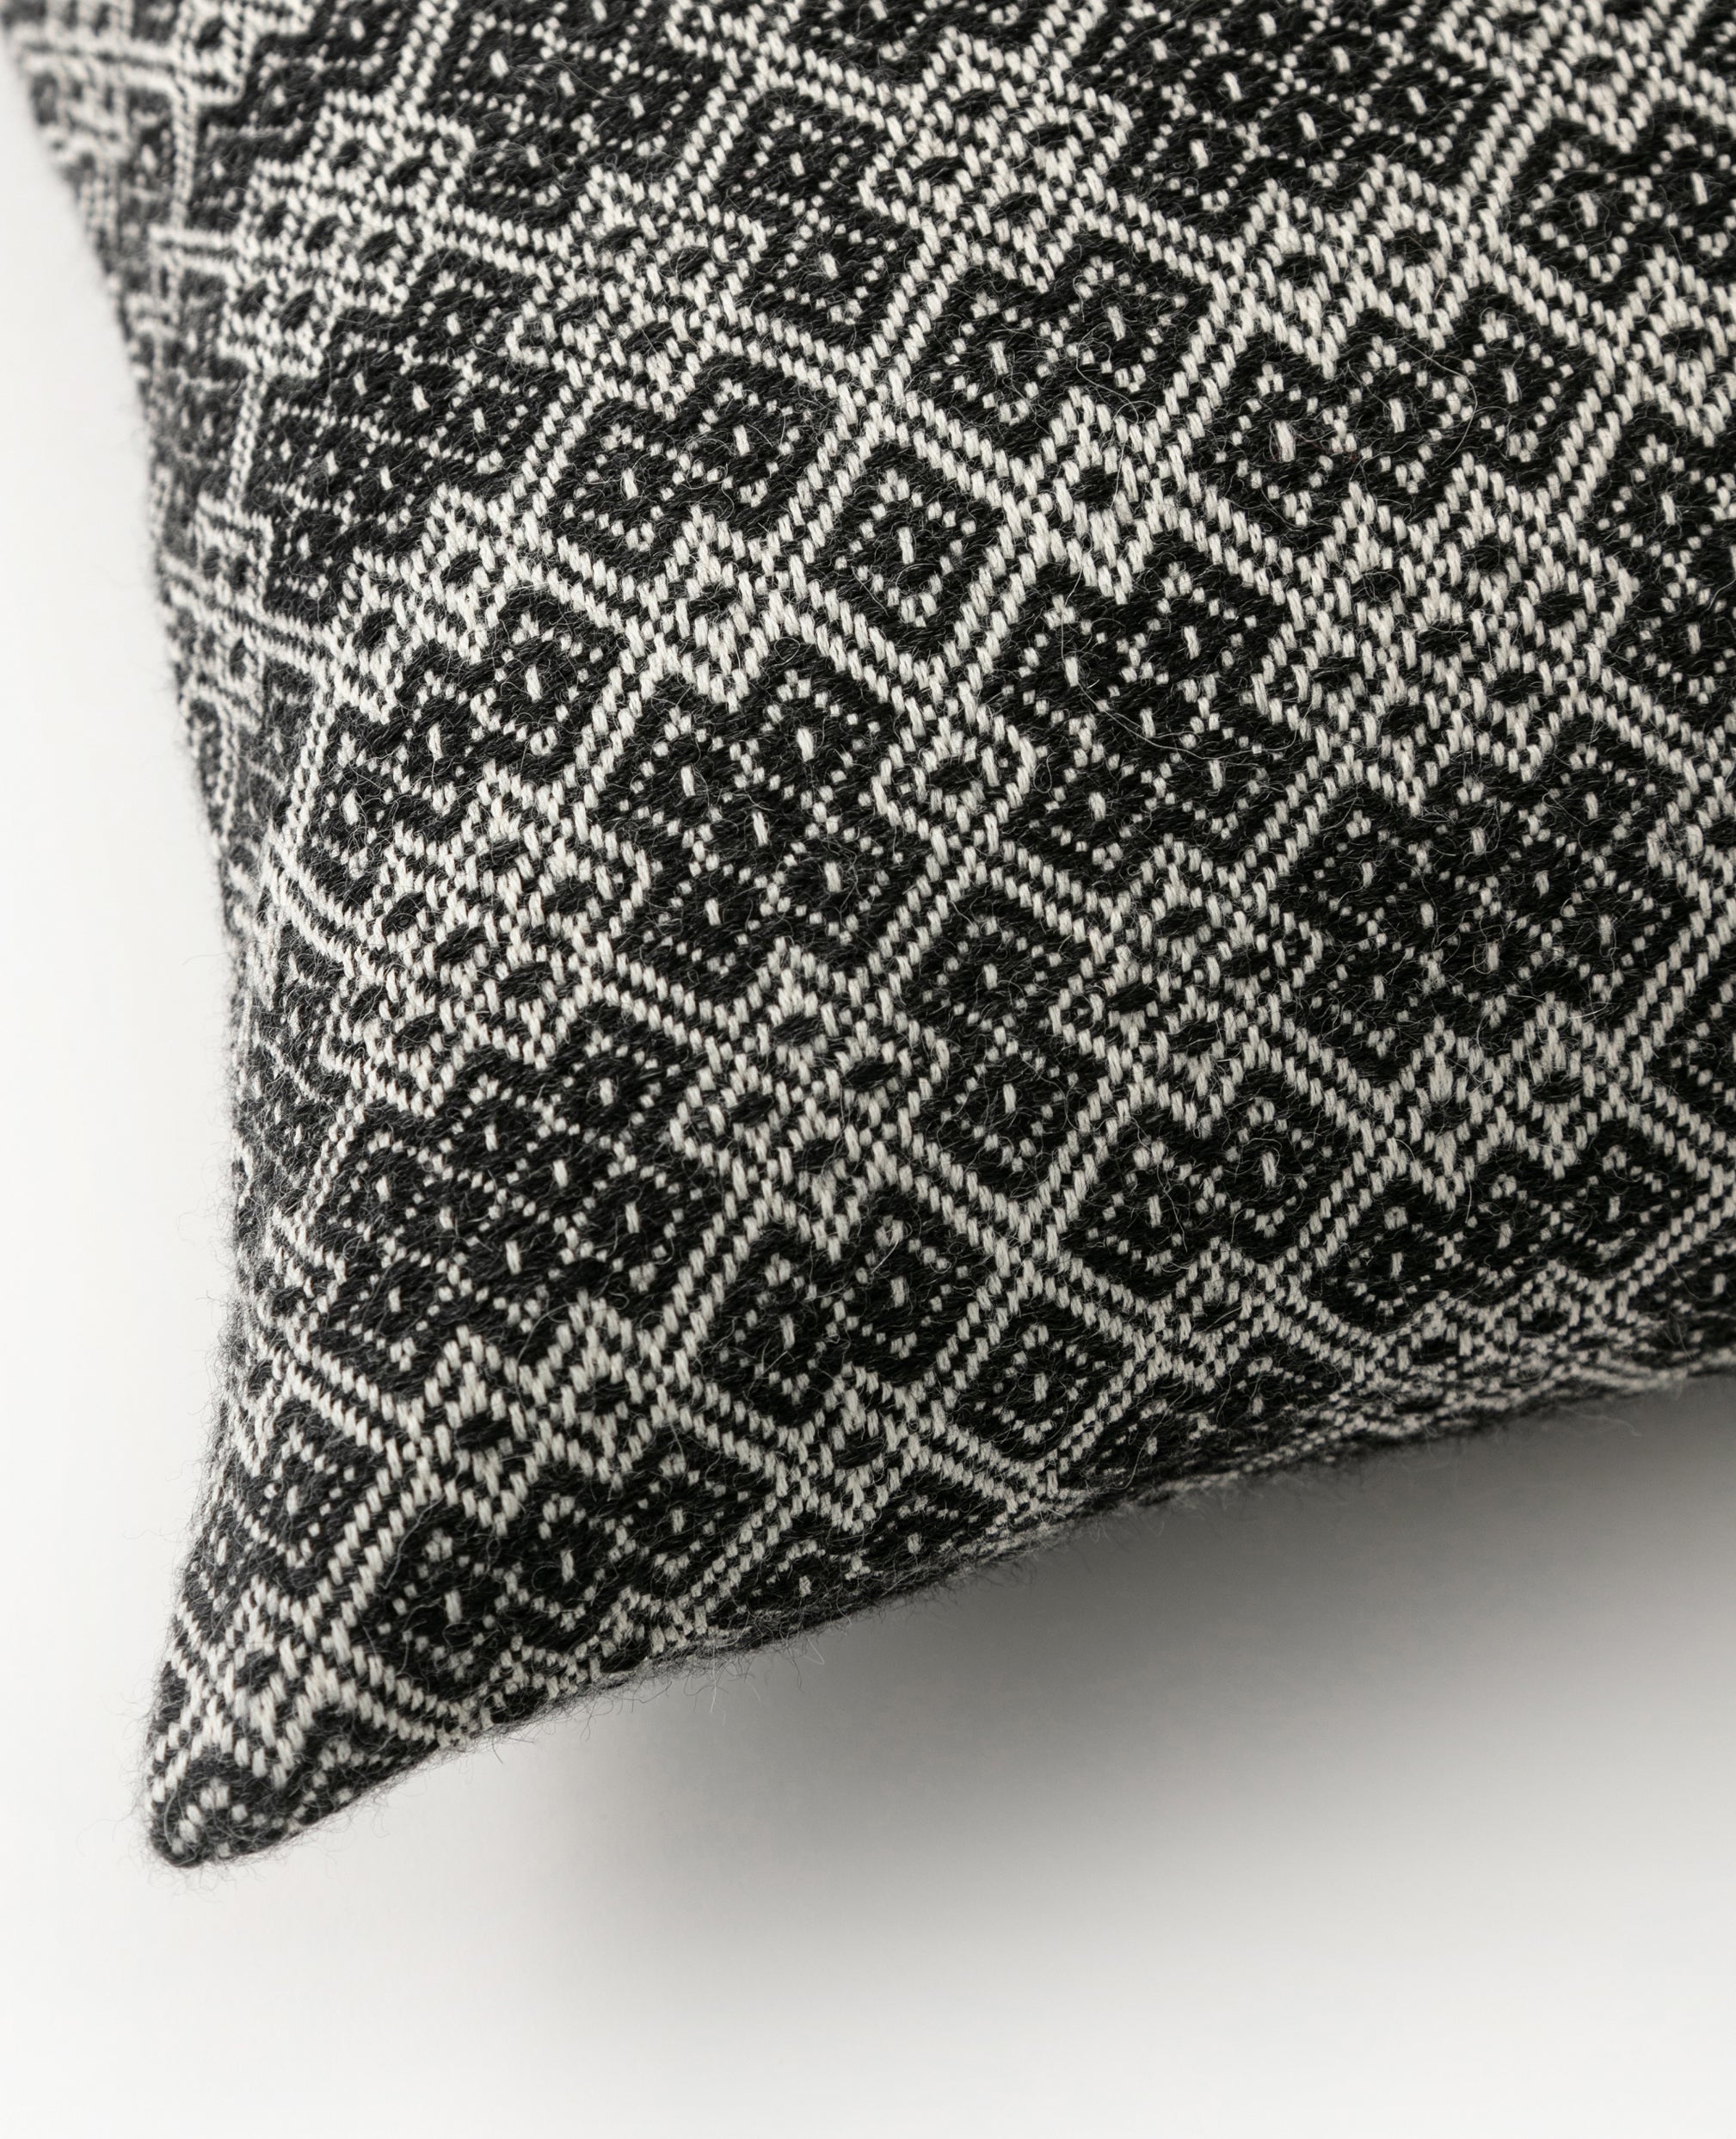 Vaeven Aro overshot cushion pillow close up